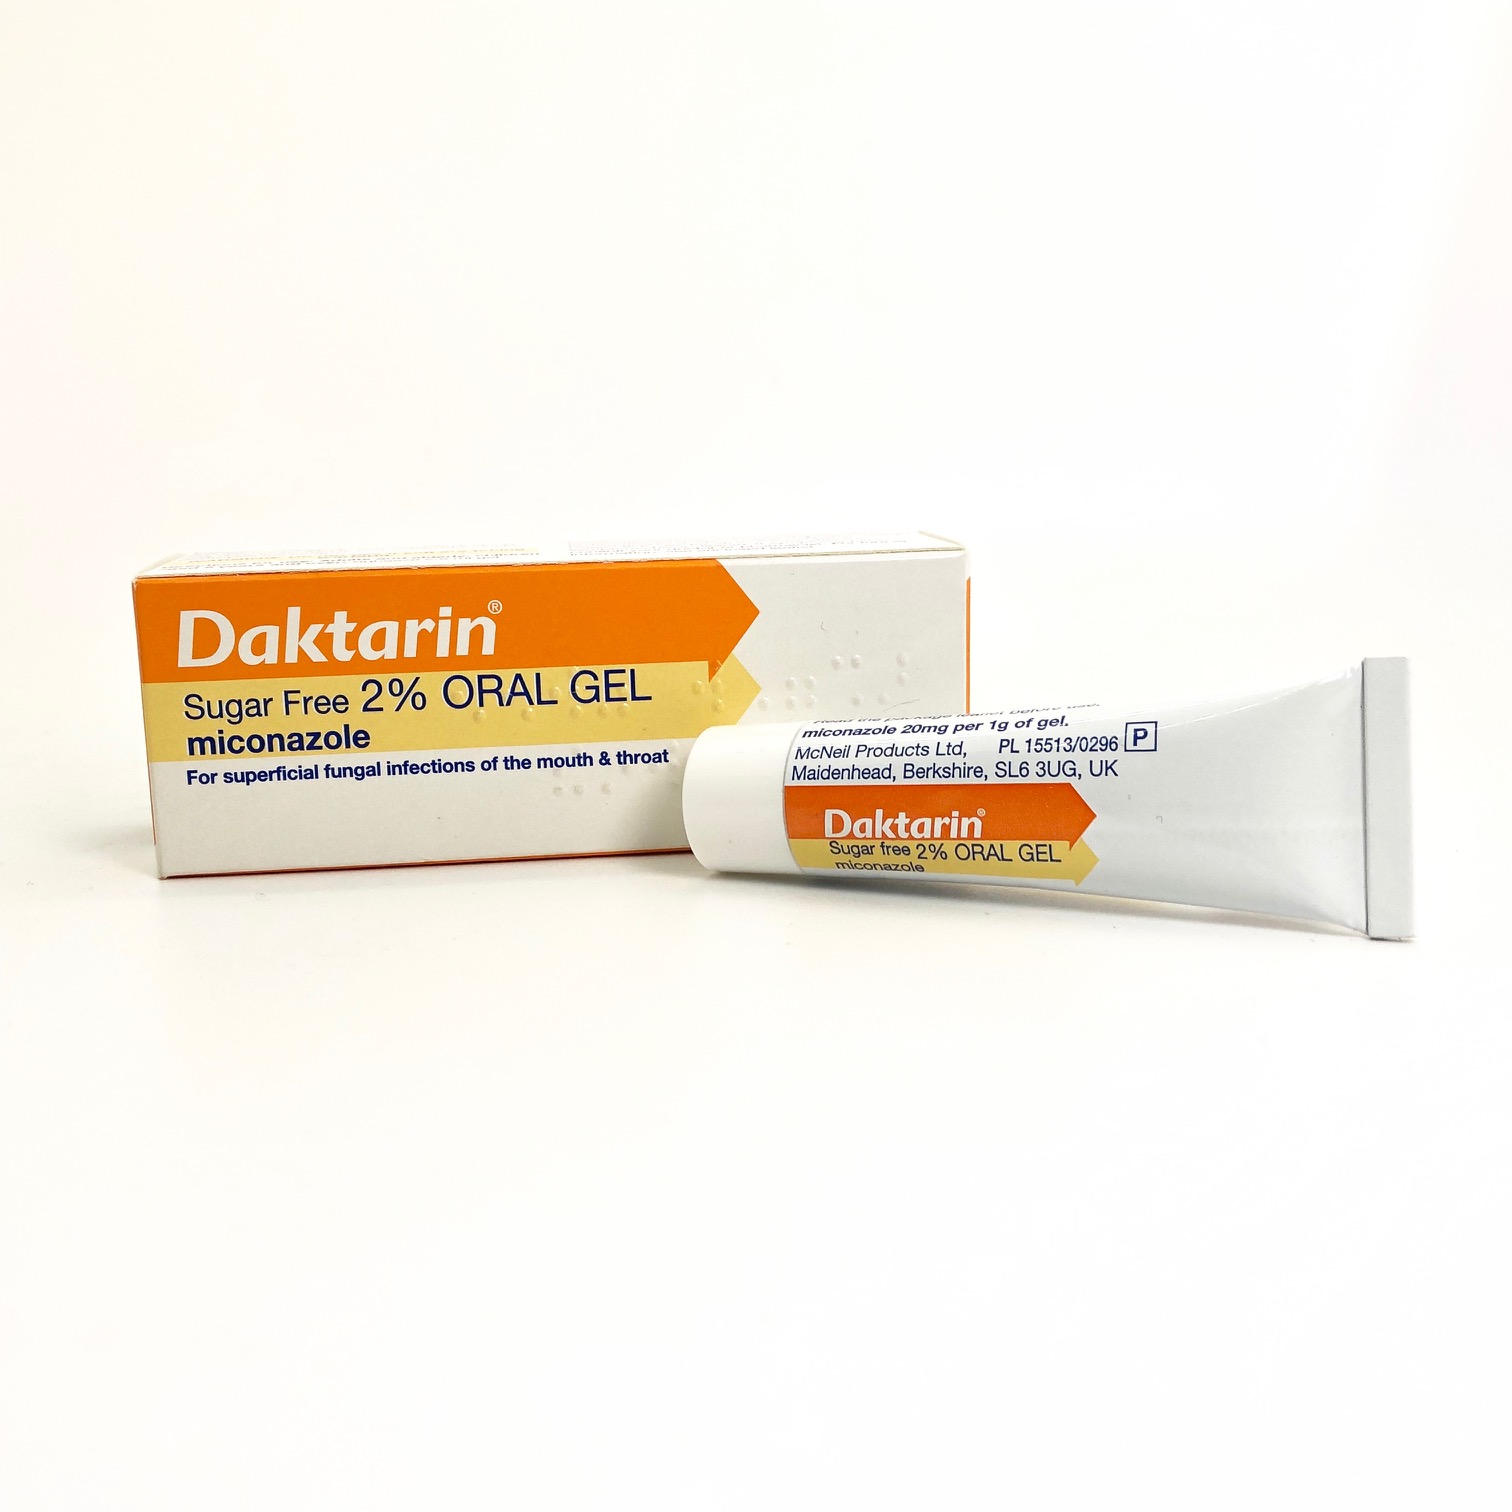 Daktarin Oral Gel Thrush, Candida Treatment 15g Tube - 3 Packs | Home Health UK1512 x 1512